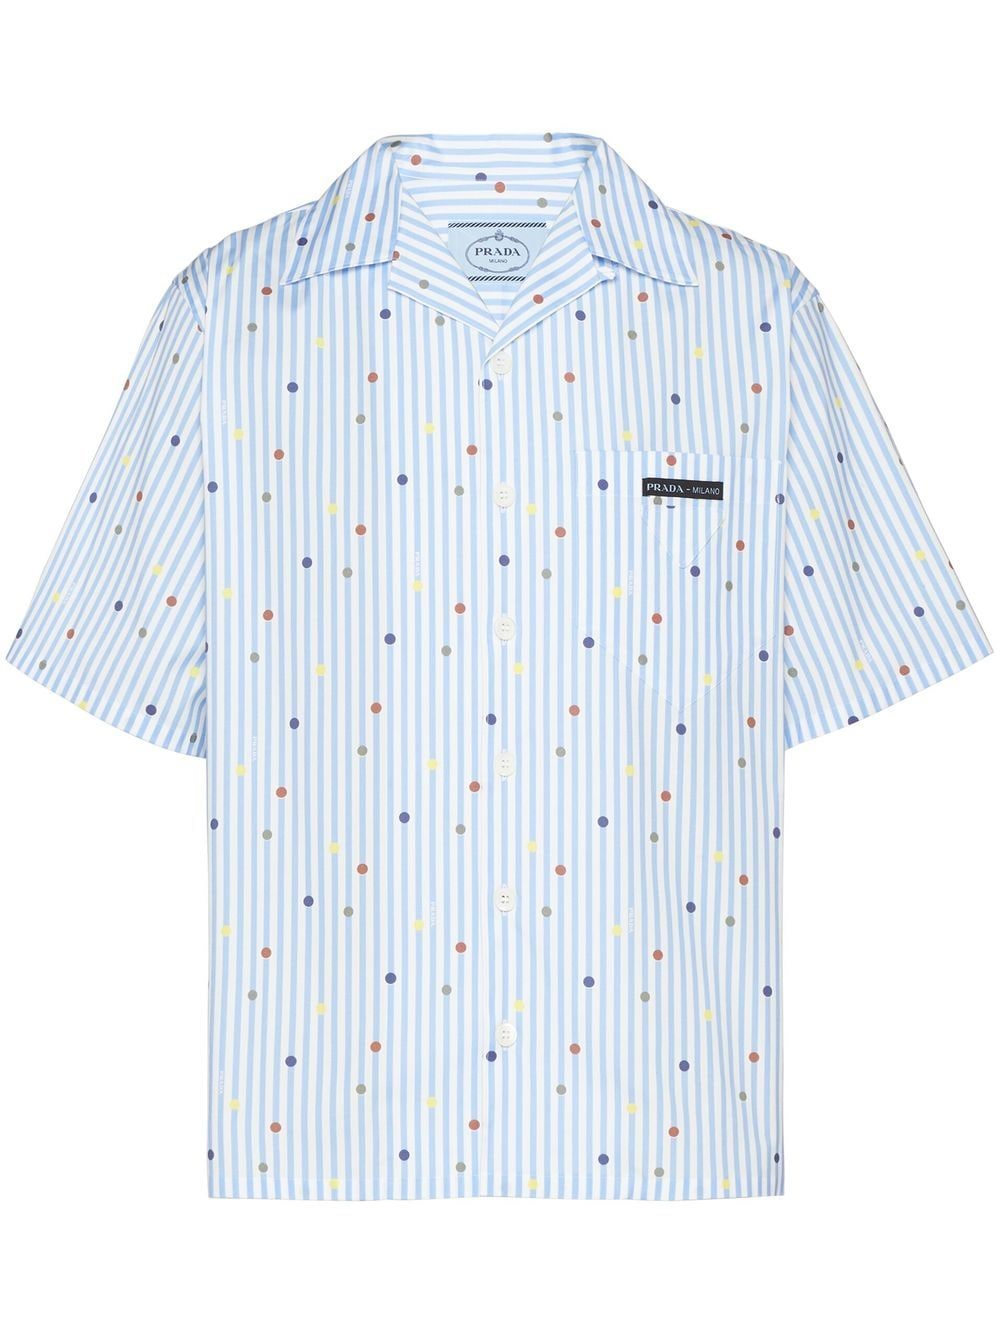 polka-dot striped shirt